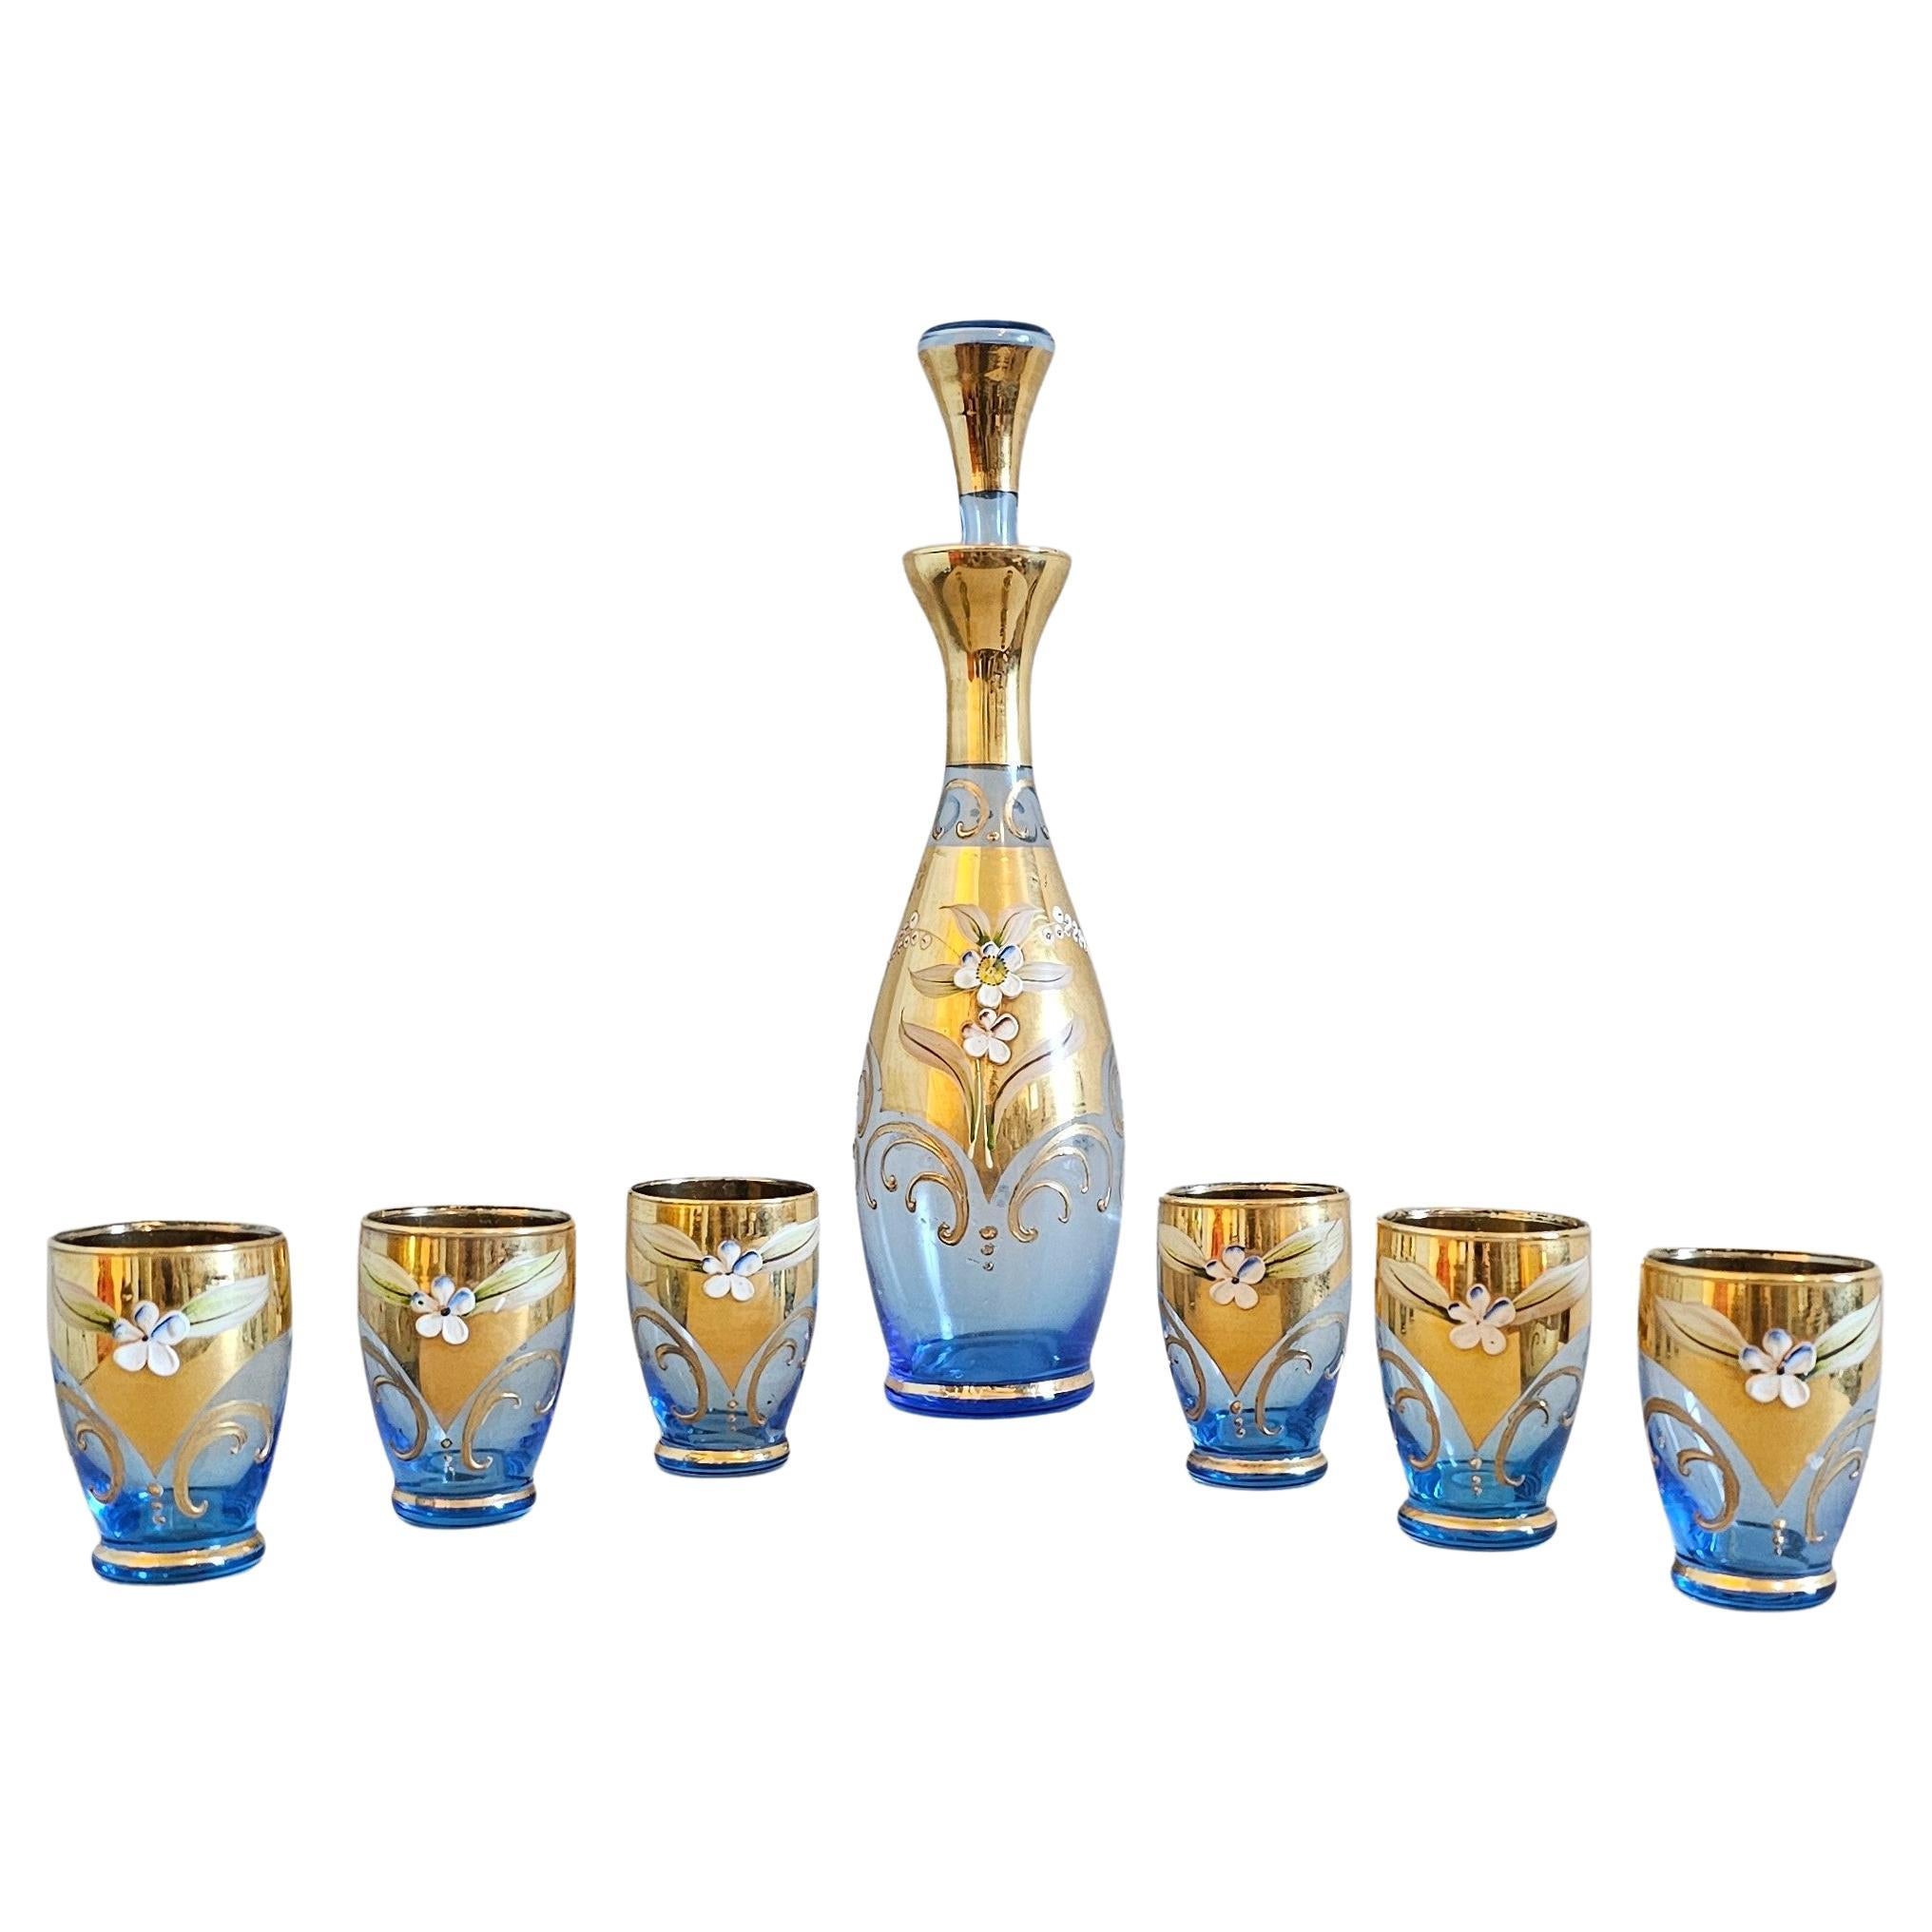 Salviati Murano vergoldet emailliert blau Kunstglas Dekanter Cordial Likör Set